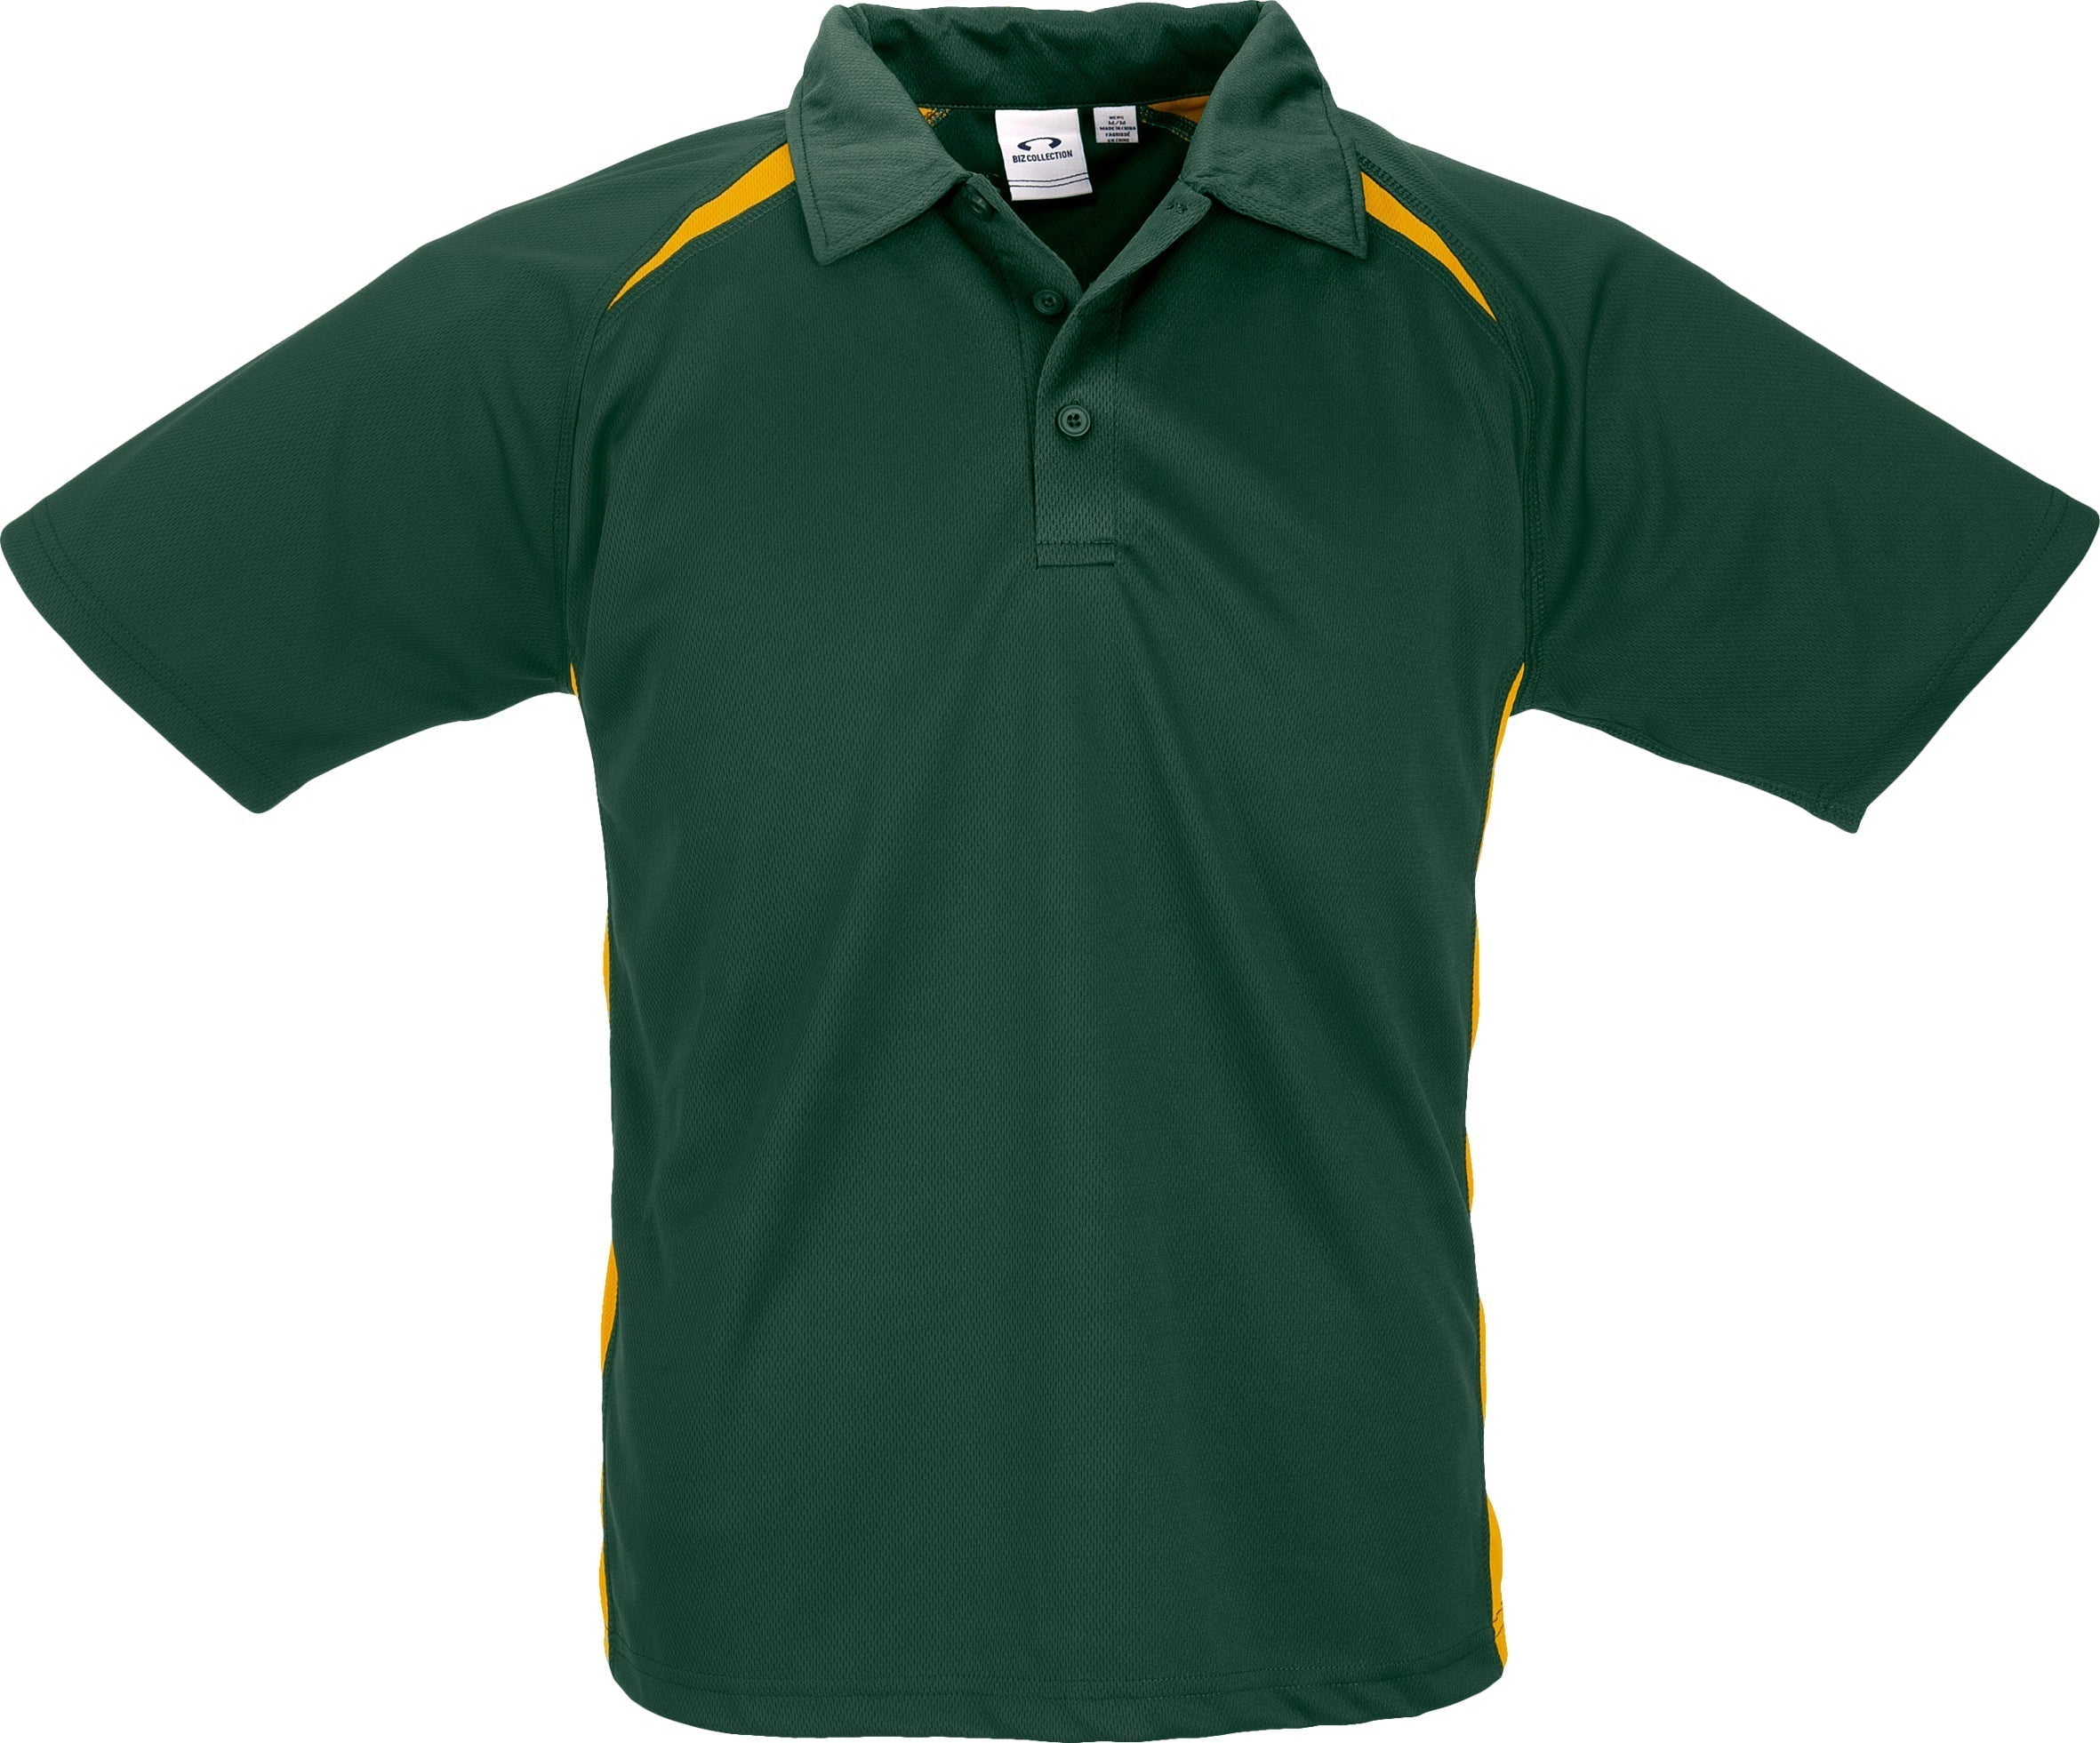 Mens Splice Golf Shirt-L-Green and Gold-GG